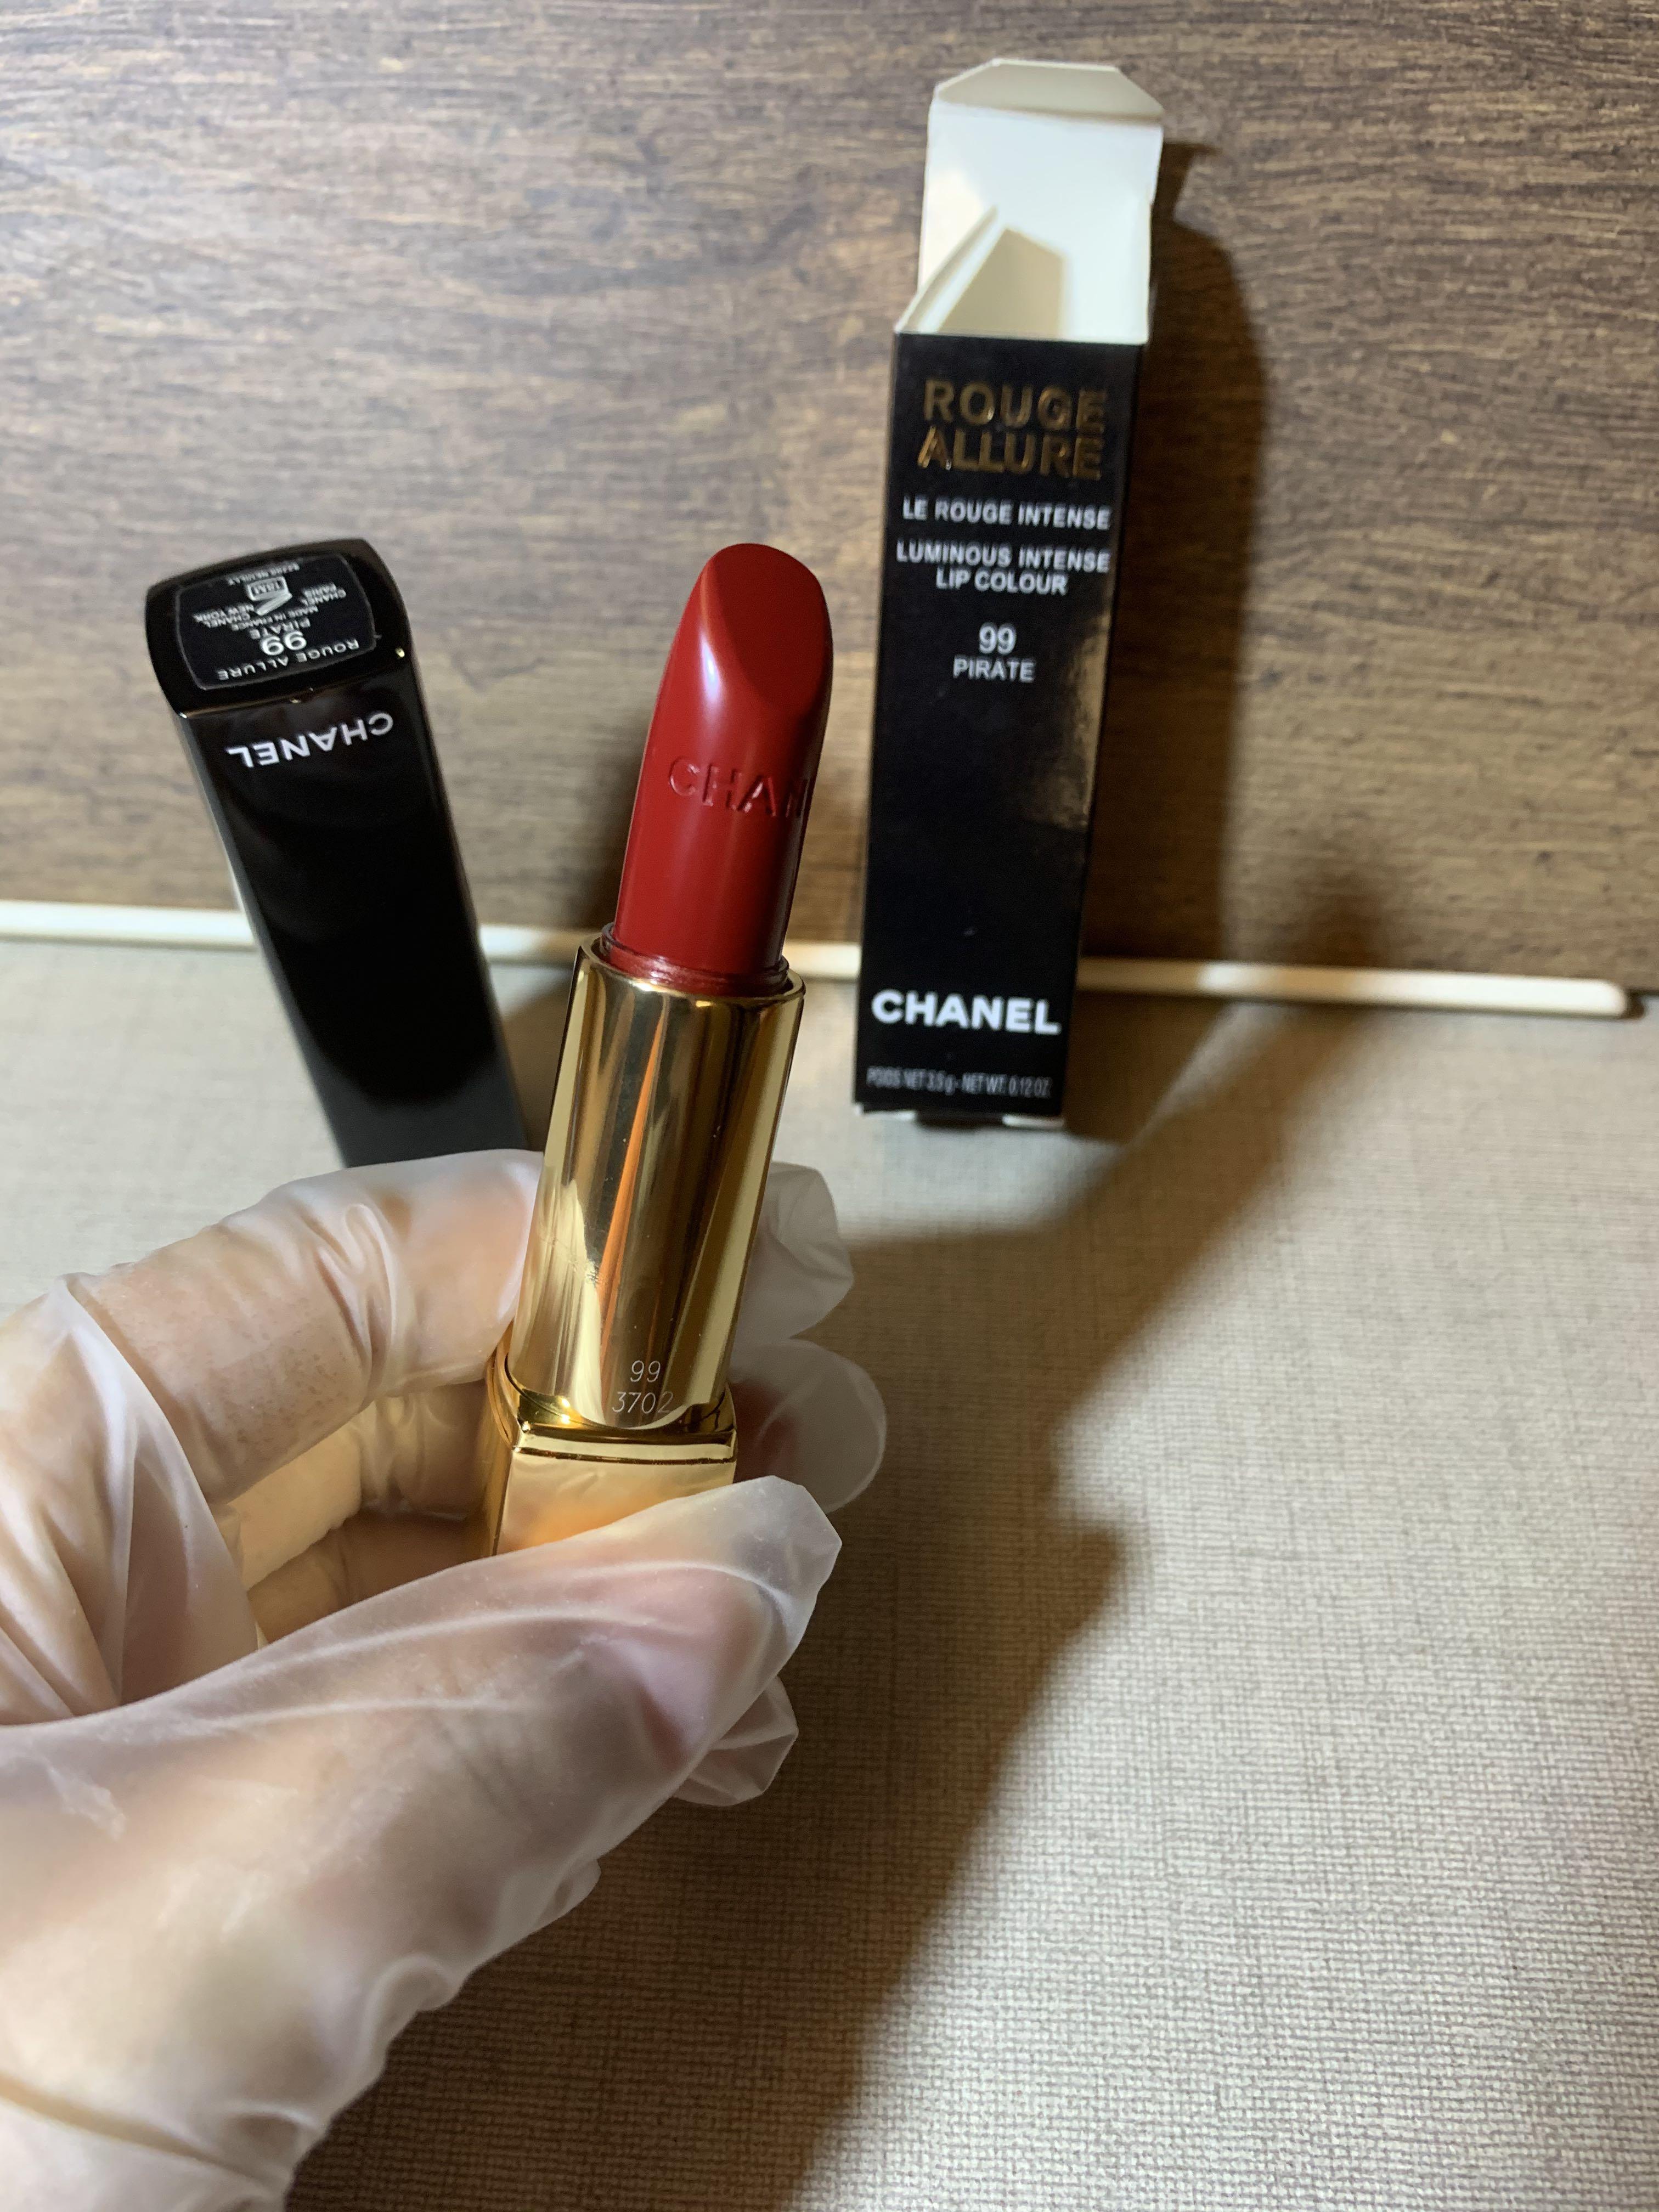 Chanel Rouge Allure Luminous Intense Lip Colour   99 Pirate 35g   Cosmetics Now Singapore